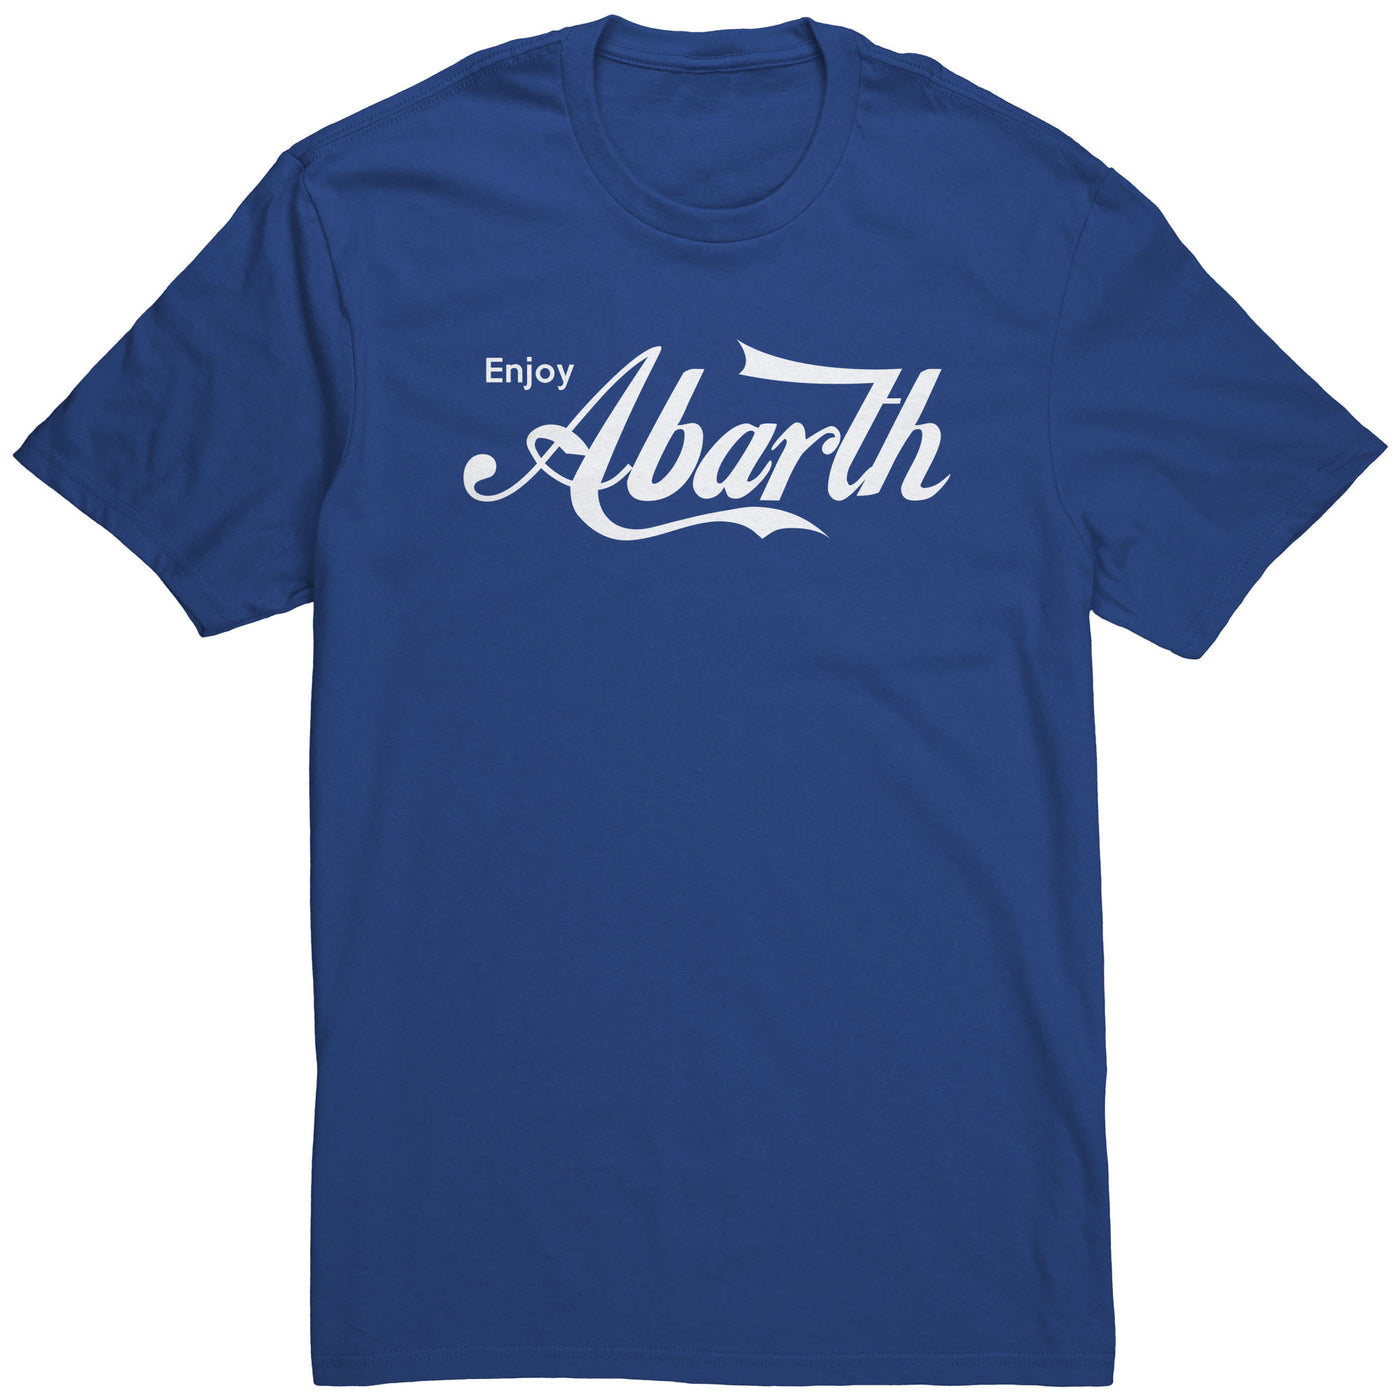 enjoy-abarth-shirt-blue